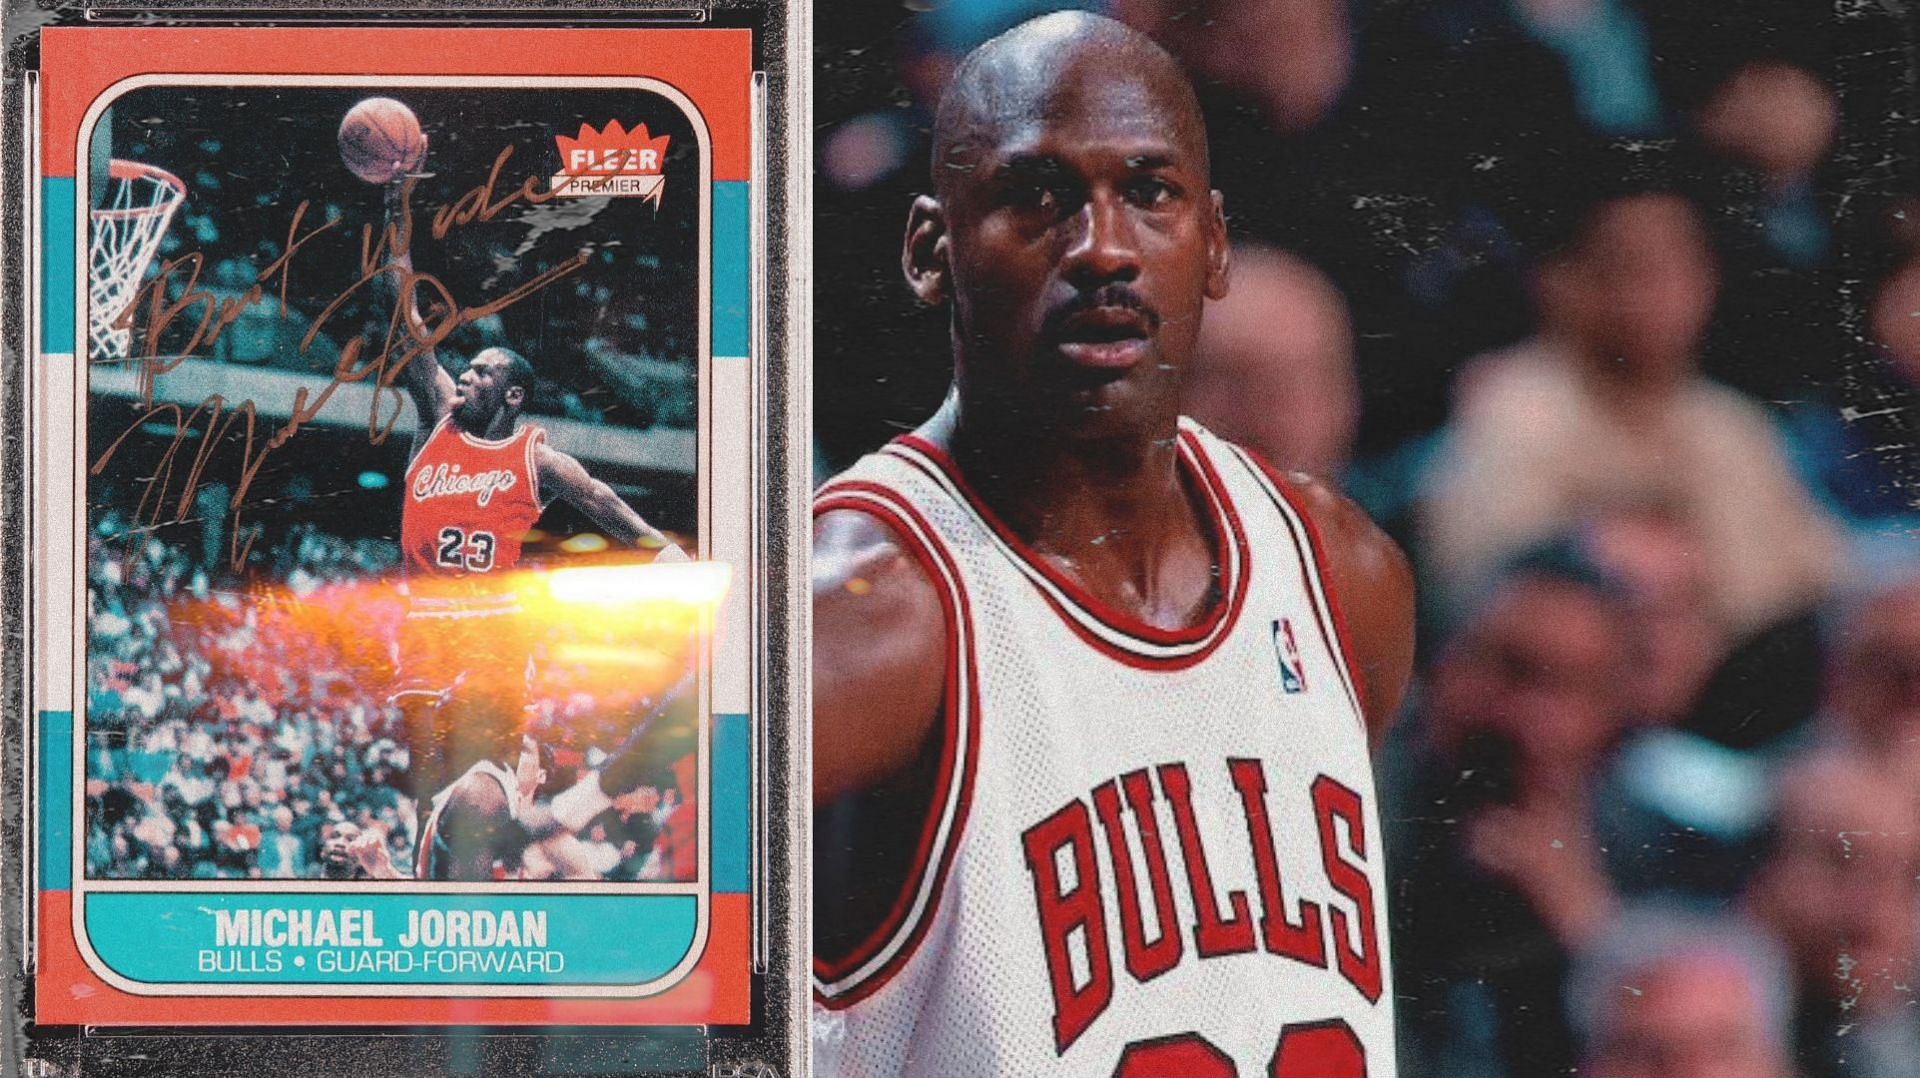 Michael Jordan autographed card’s value crosses  million mark at auction, but it’s hard to hit that figure due to bad pen